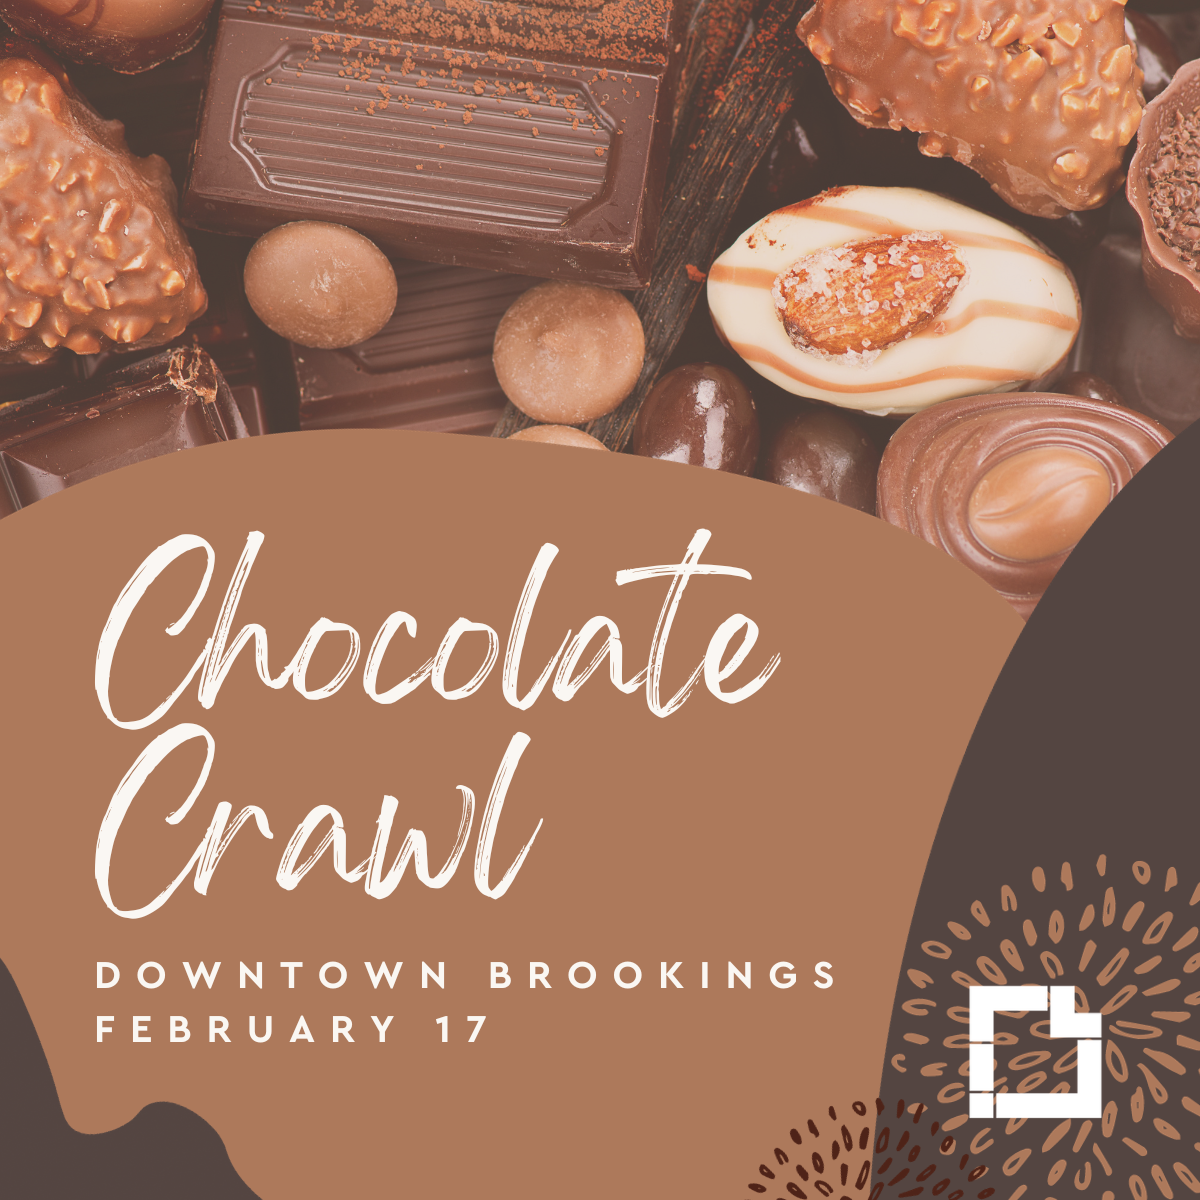 Chocolate Crawl in Downtown Brookings